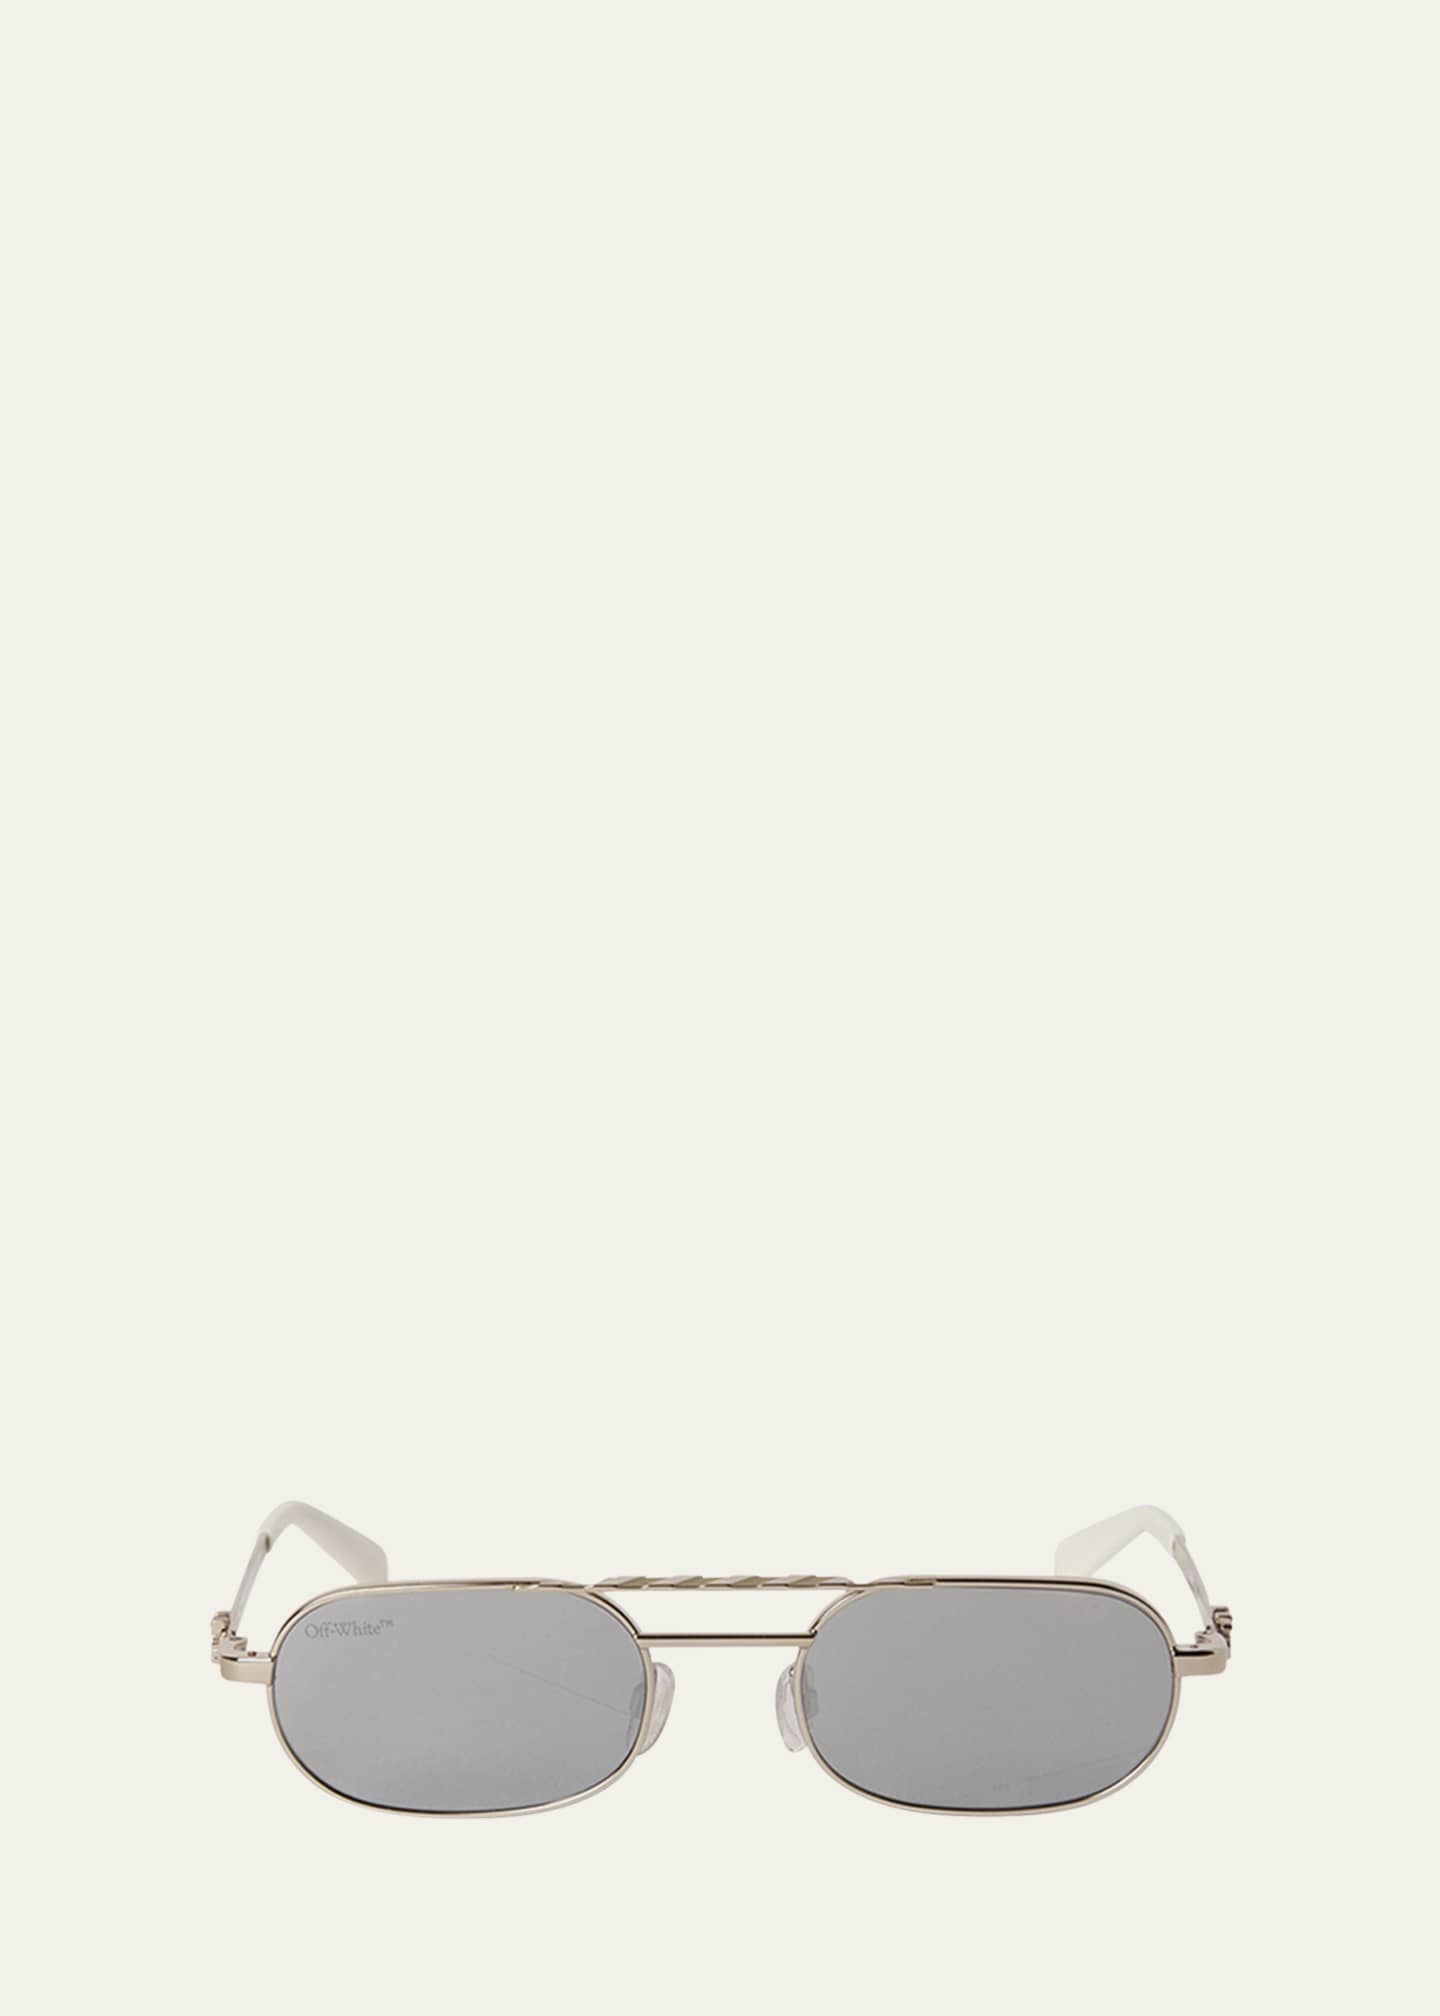 Off-White Men's Baltimore Oval Aviator Sunglasses - Bergdorf Goodman